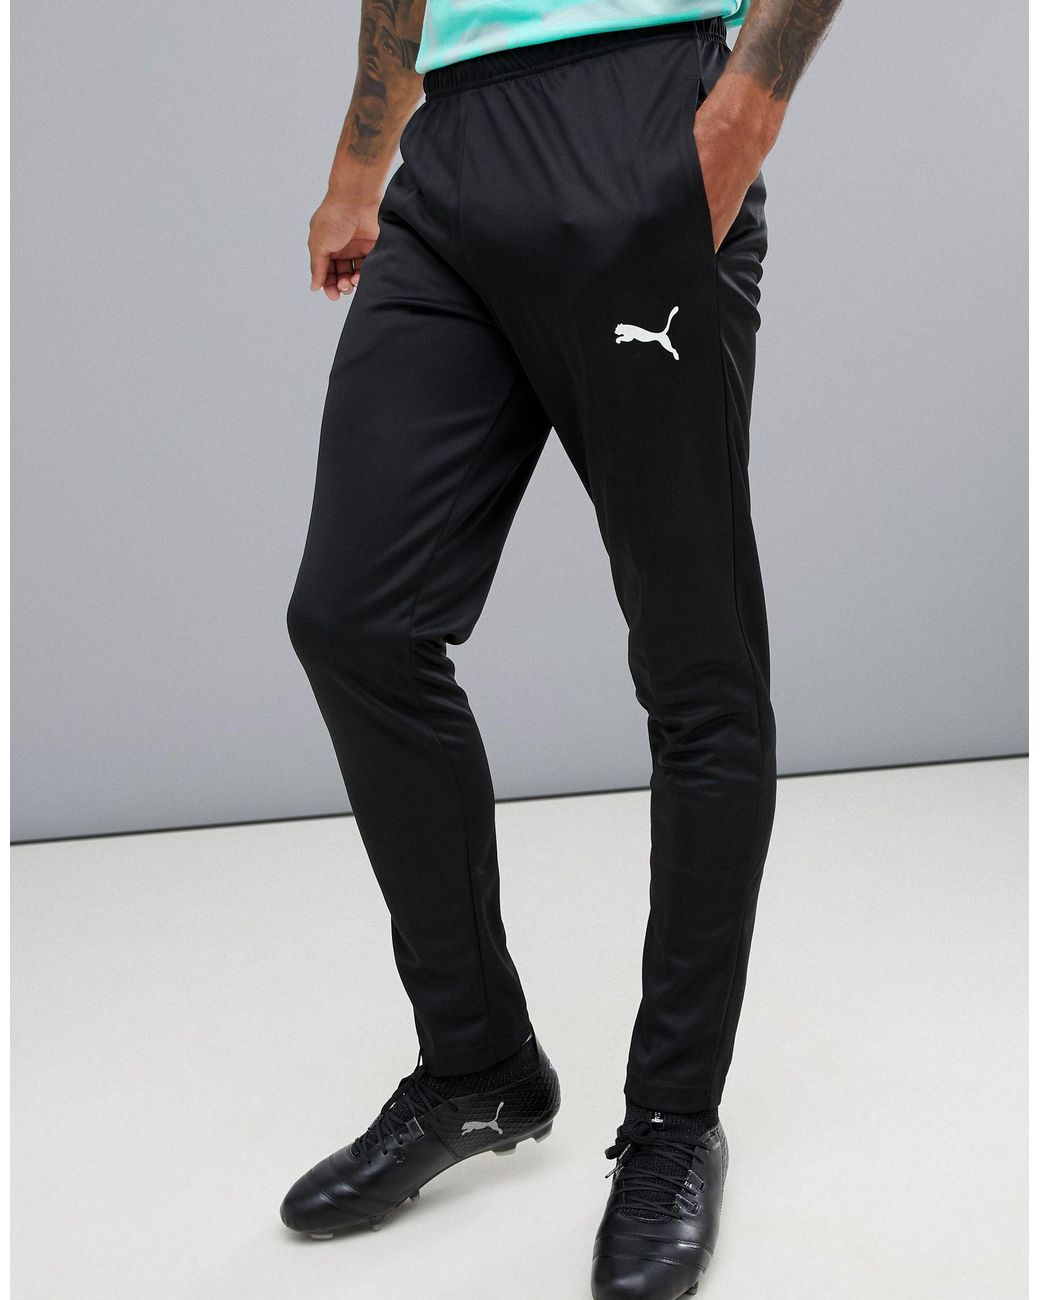 PUMA Soccer Play Training Pants in Black Men | Lyst